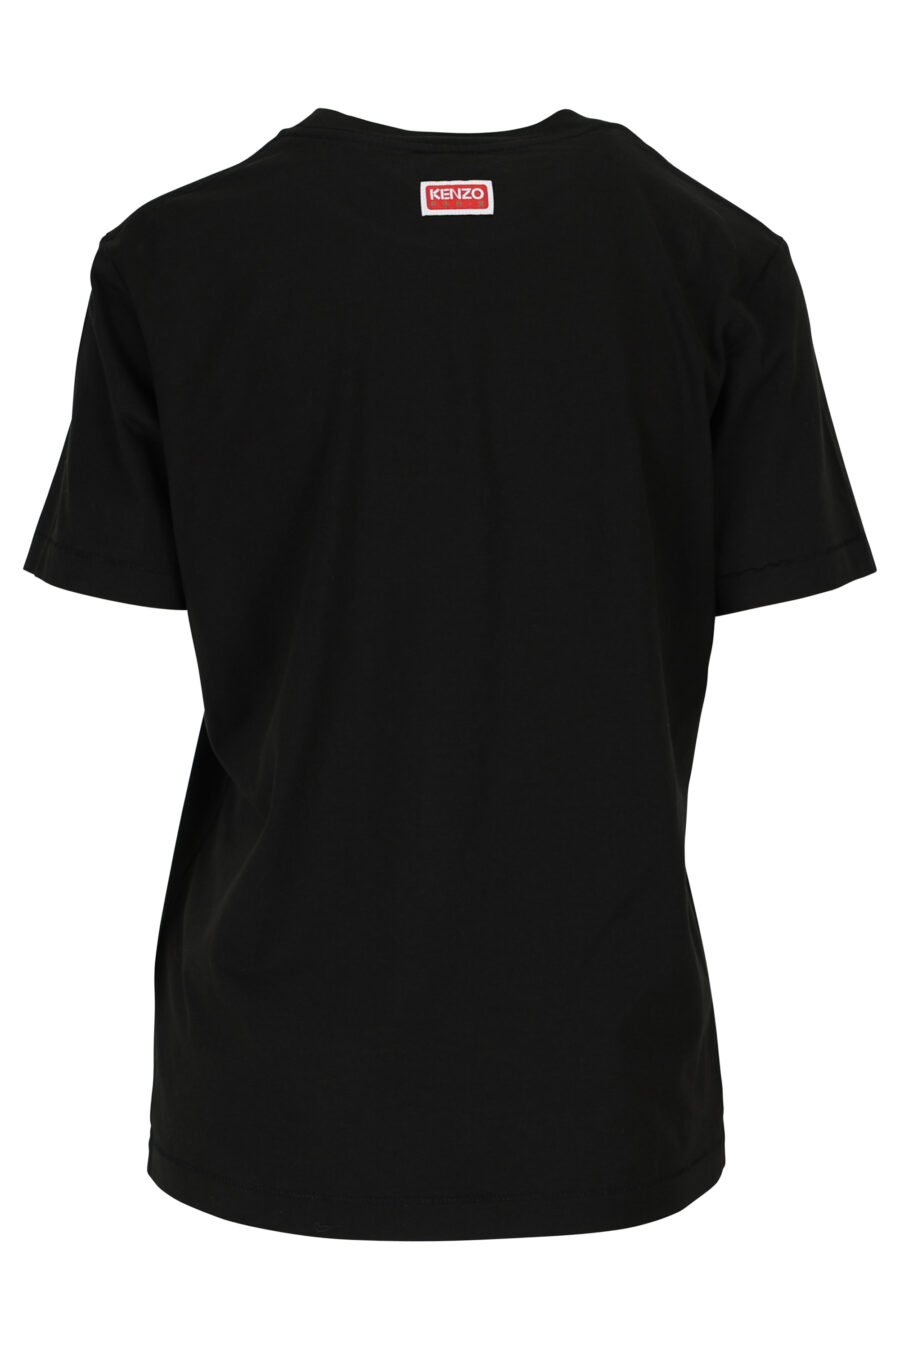 Black T-shirt with maxilogo "boke flower" - 3612230483170 1